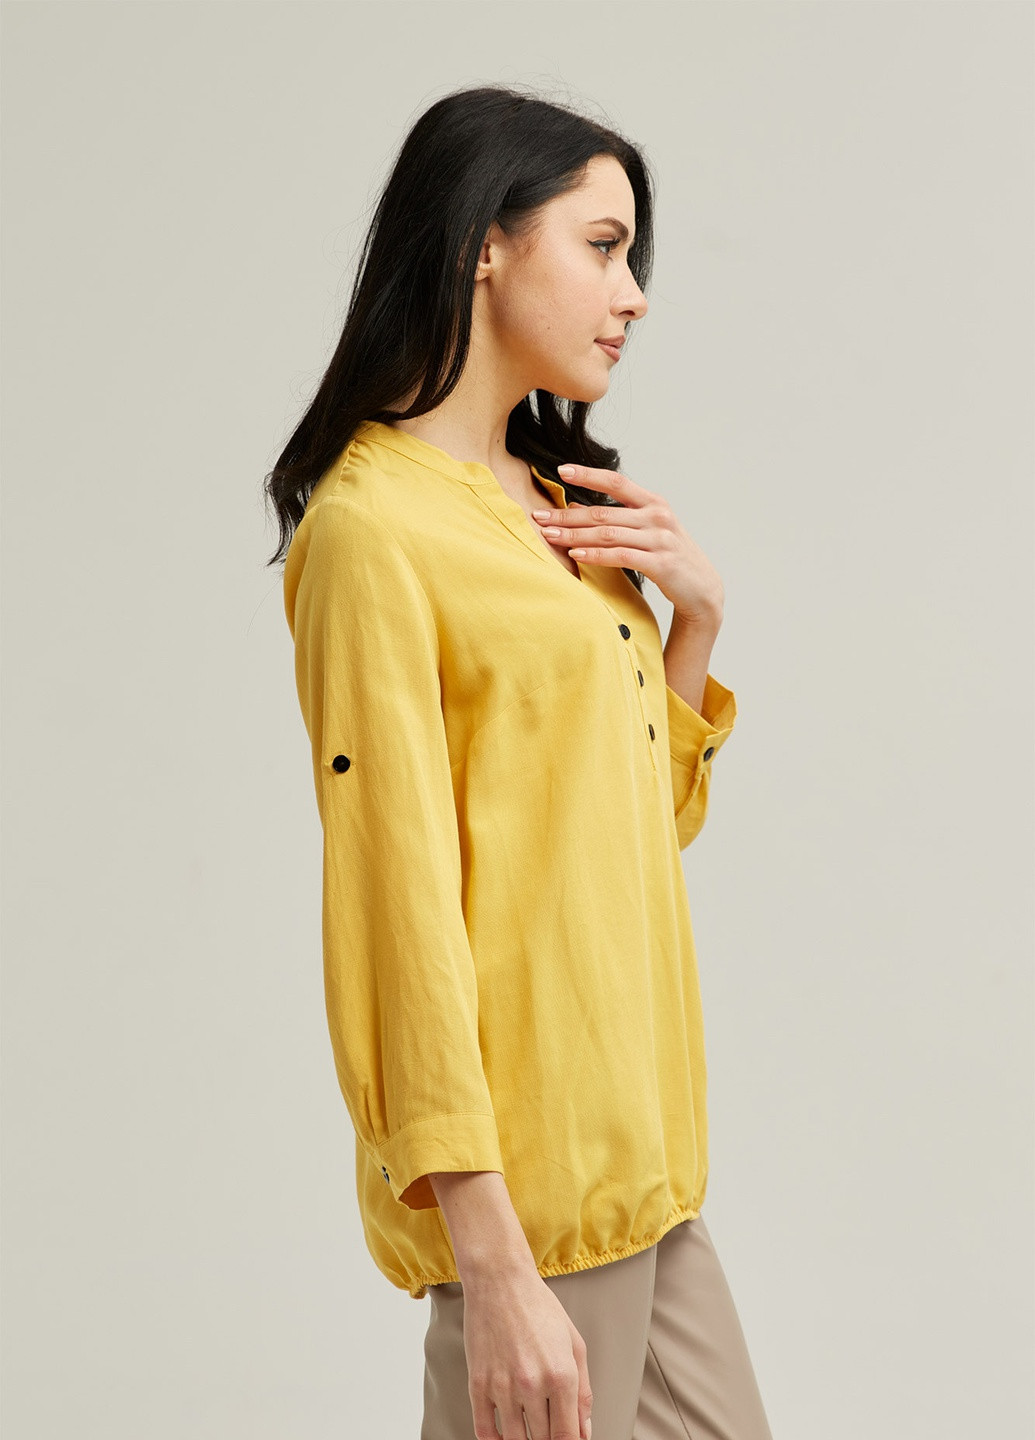 Жовта блуза yellow Garne